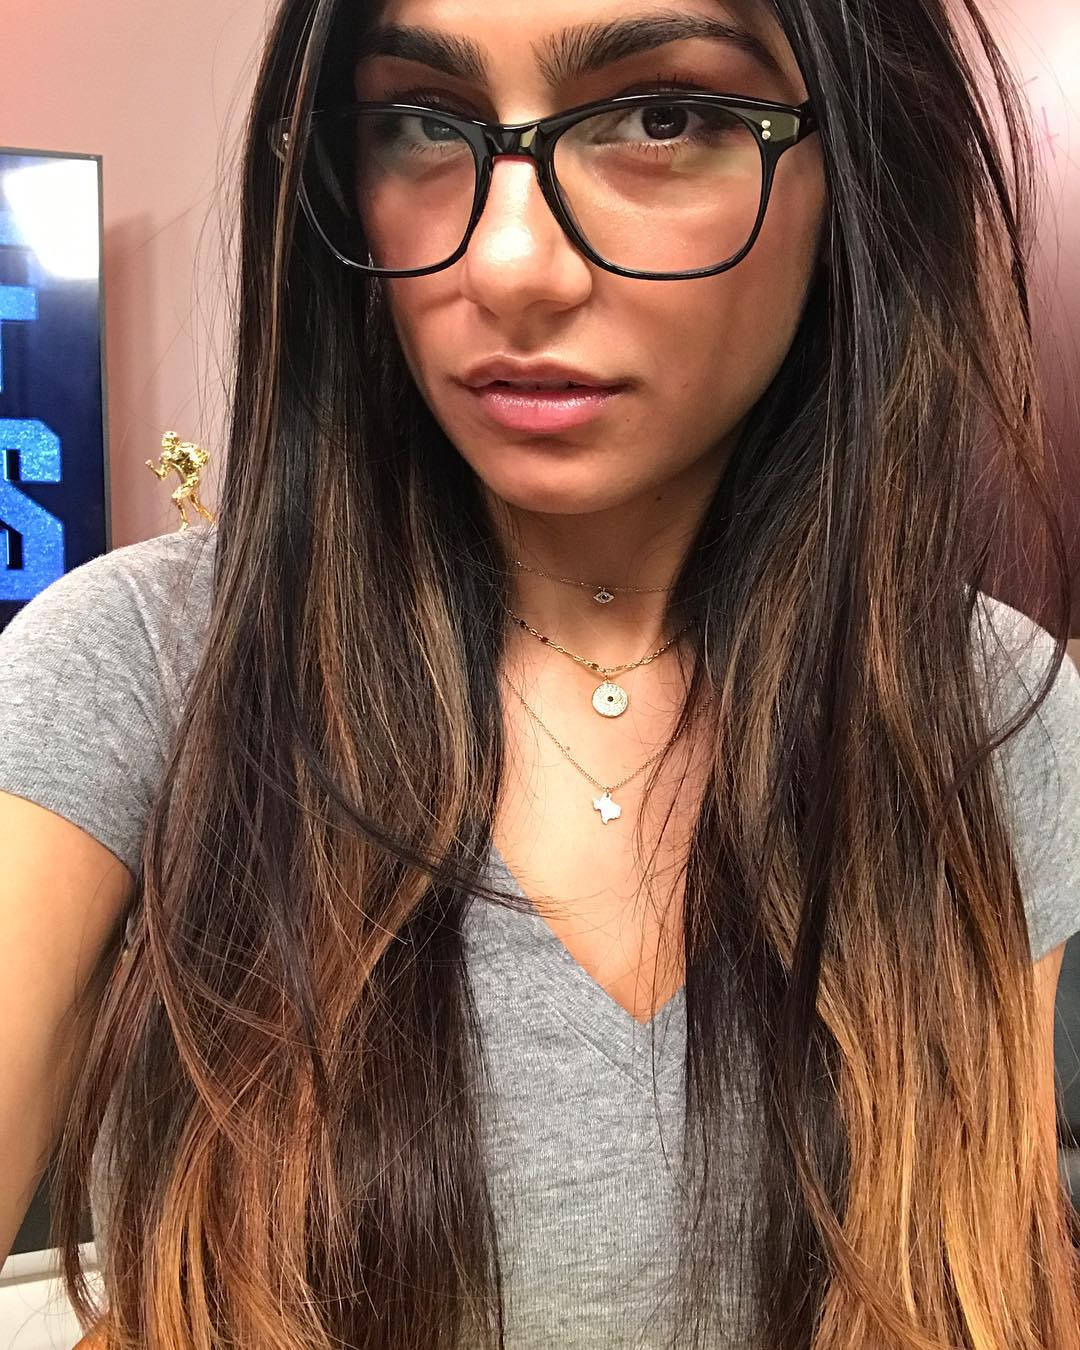 Mia Khalifa Eyeglass Selfie Wallpaper